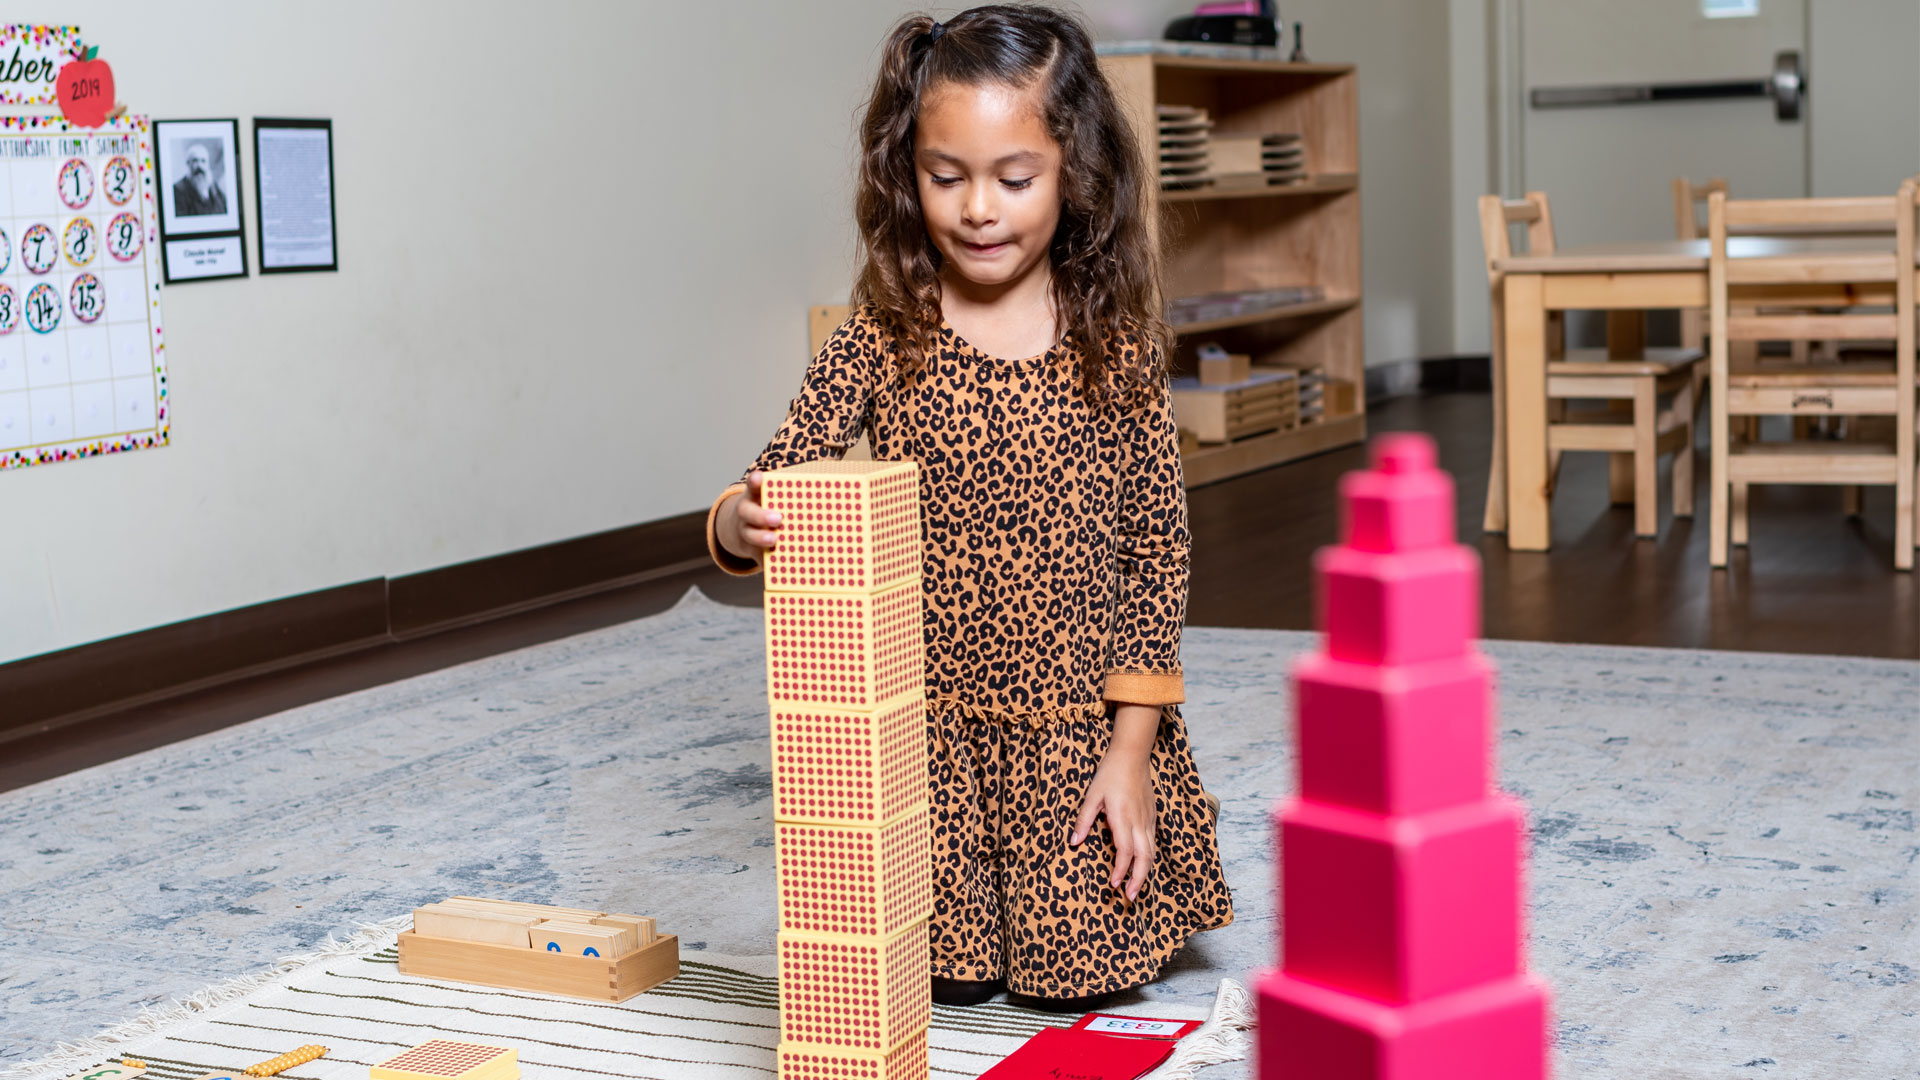 A little girl playing wooden blocks